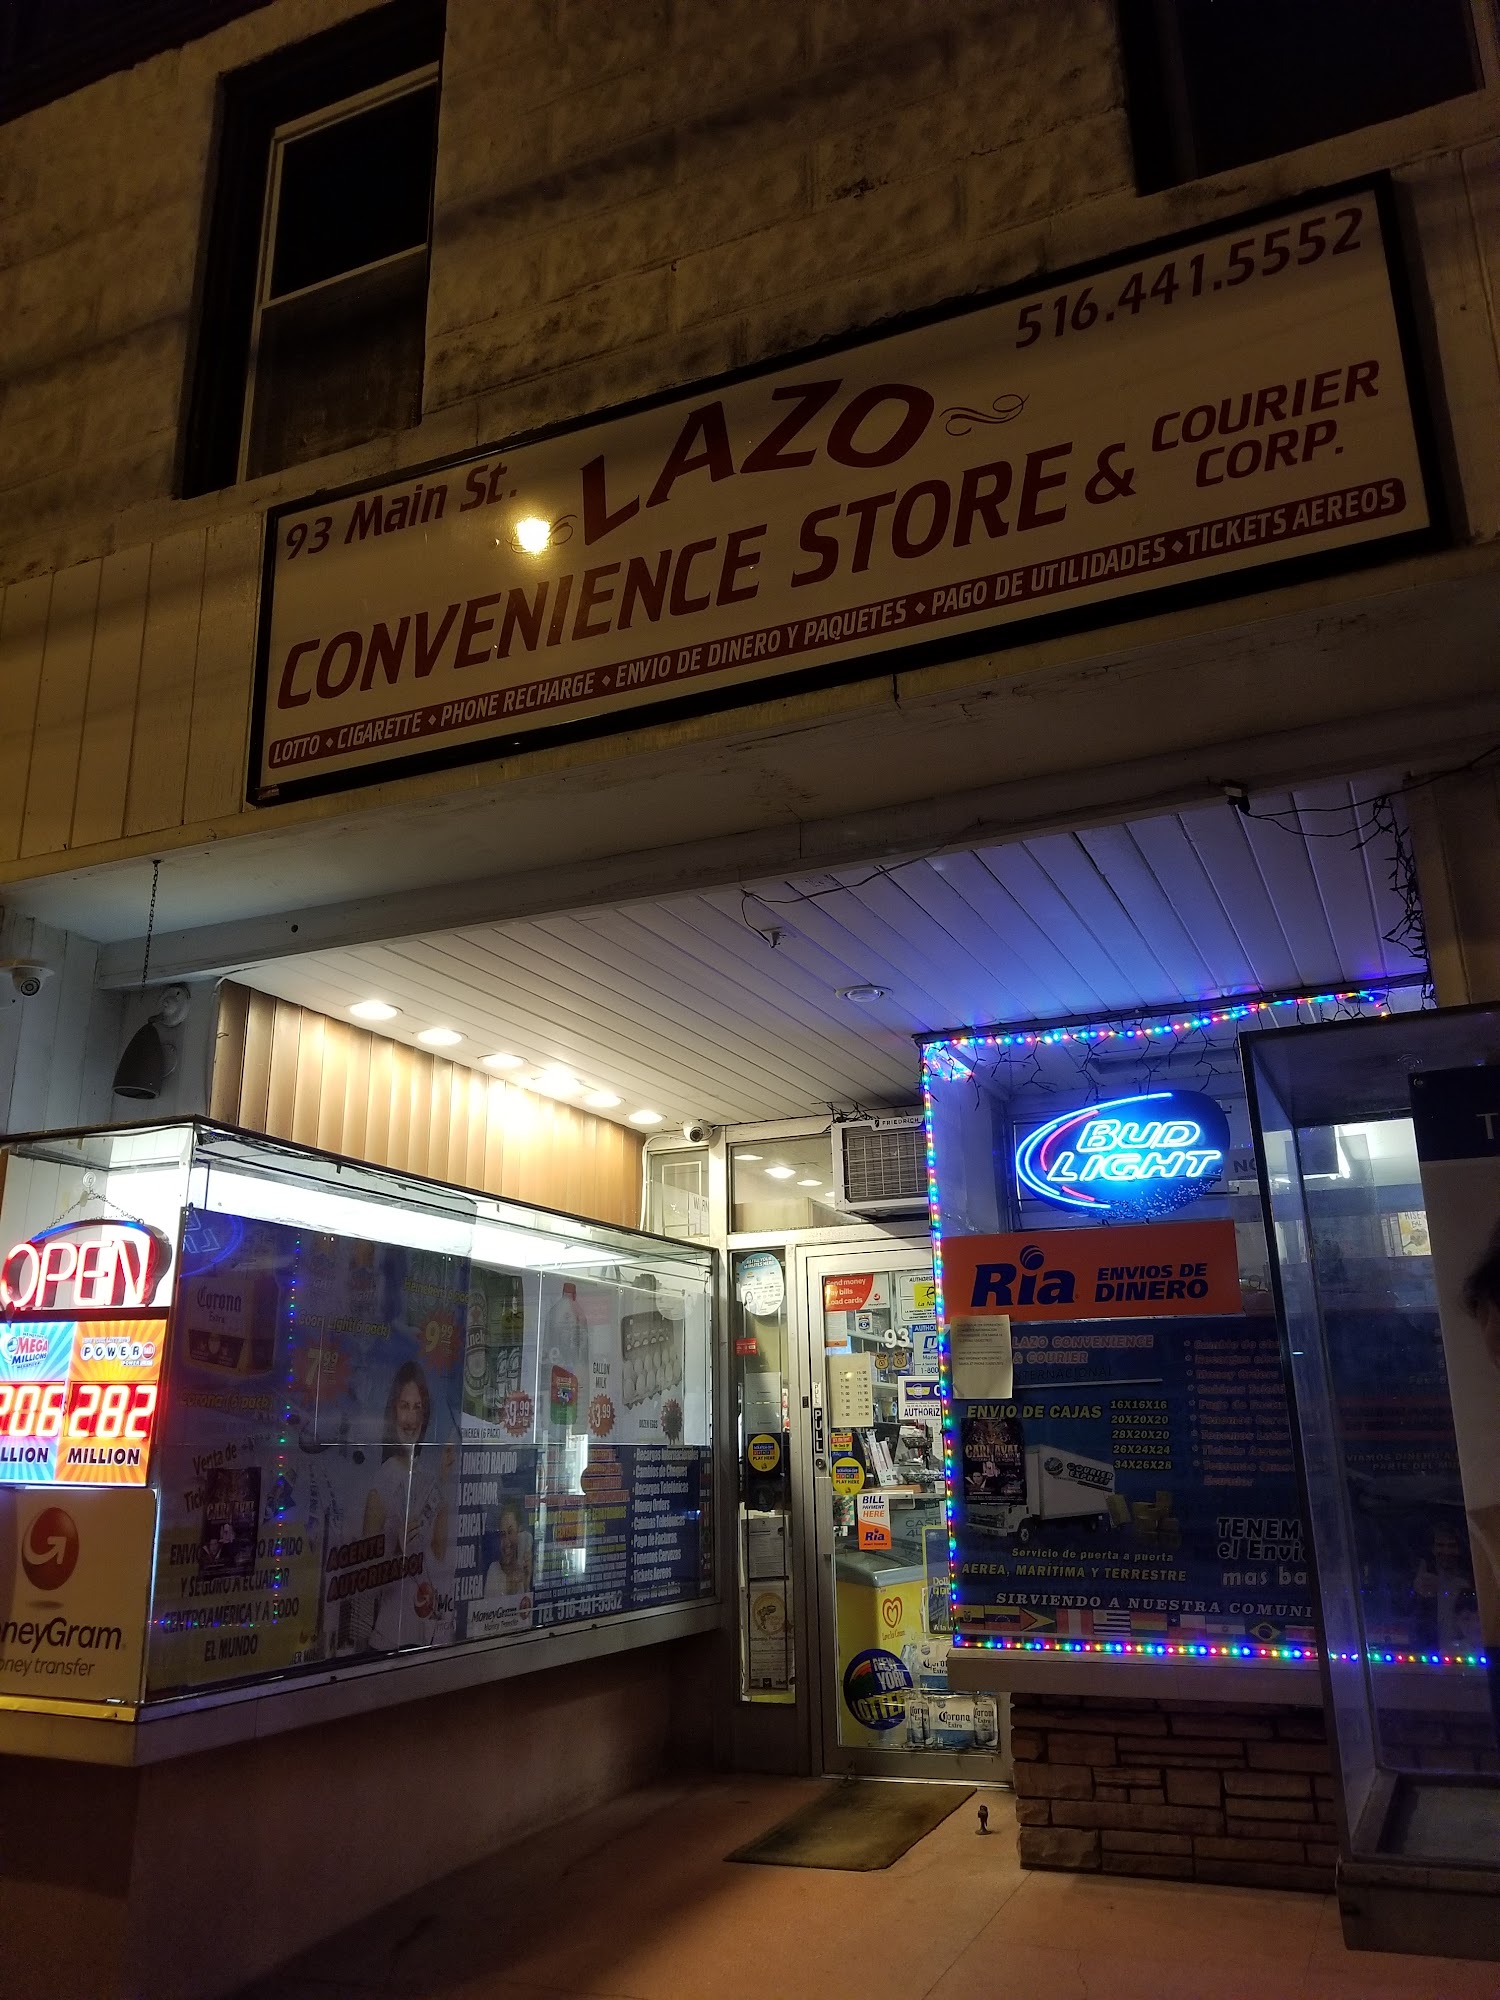 Lazo Bro's Convenience Store & Courier